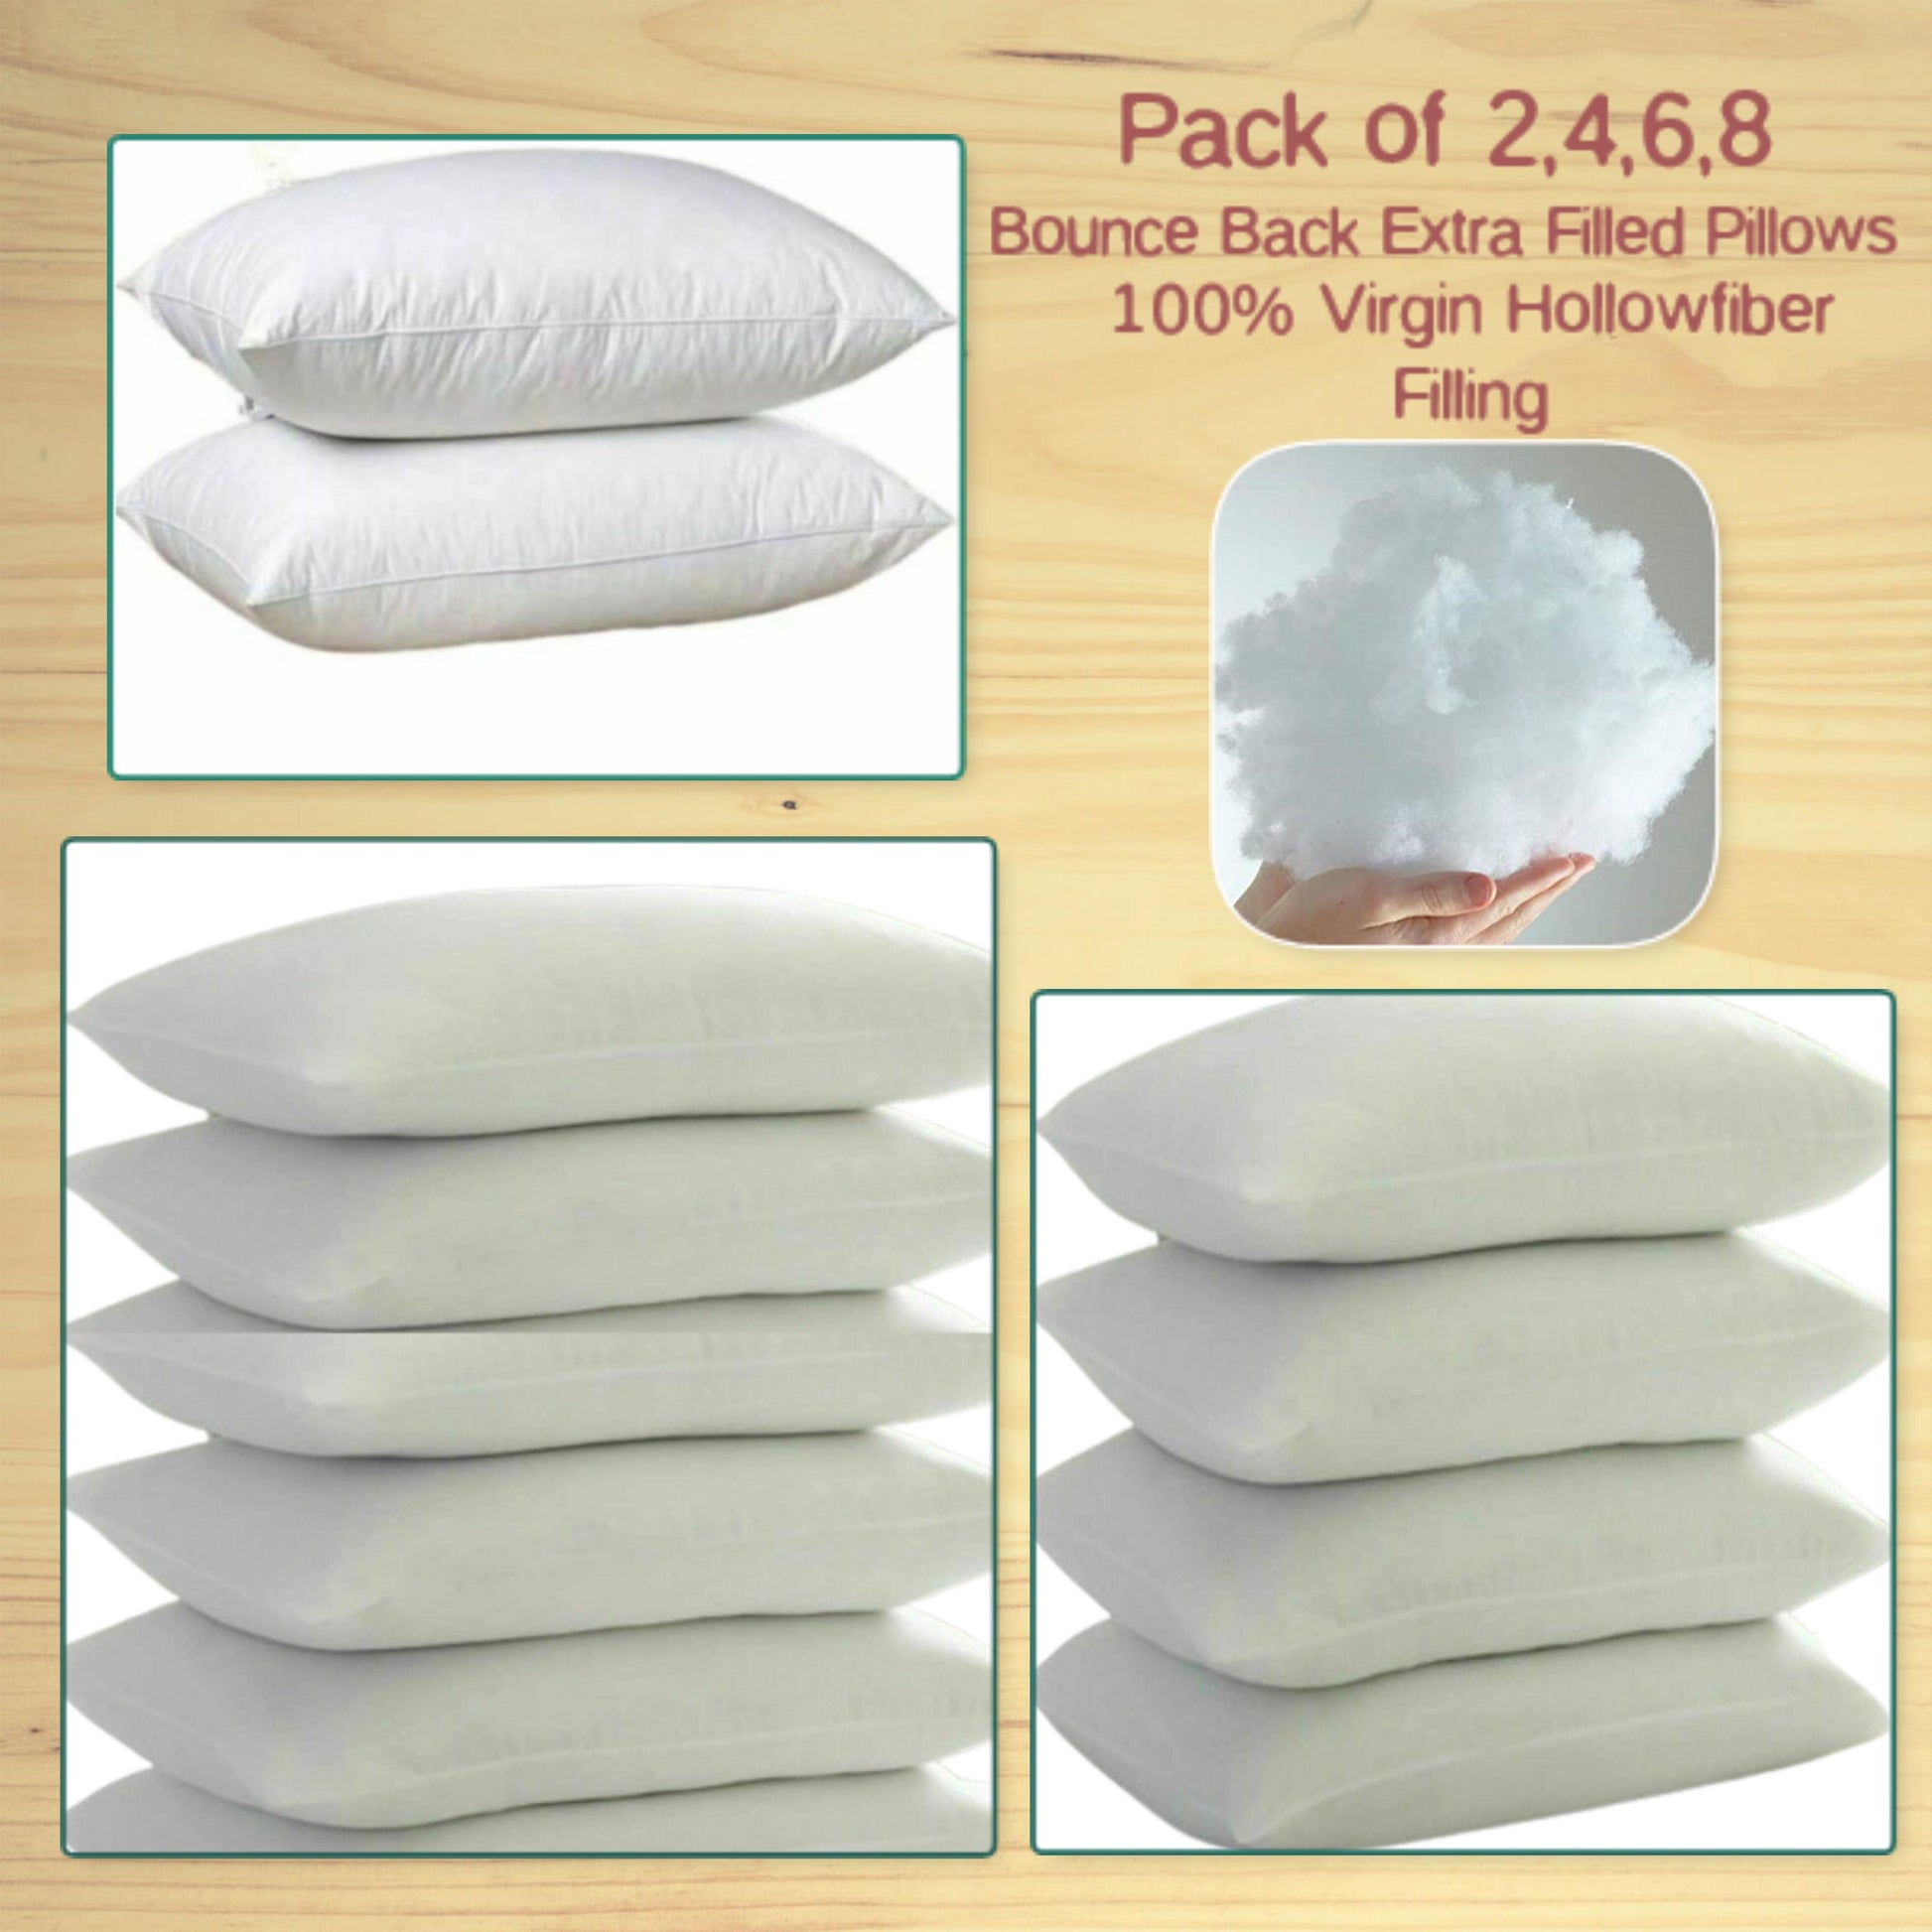 materialfilling Hollow Fibre Pillows 